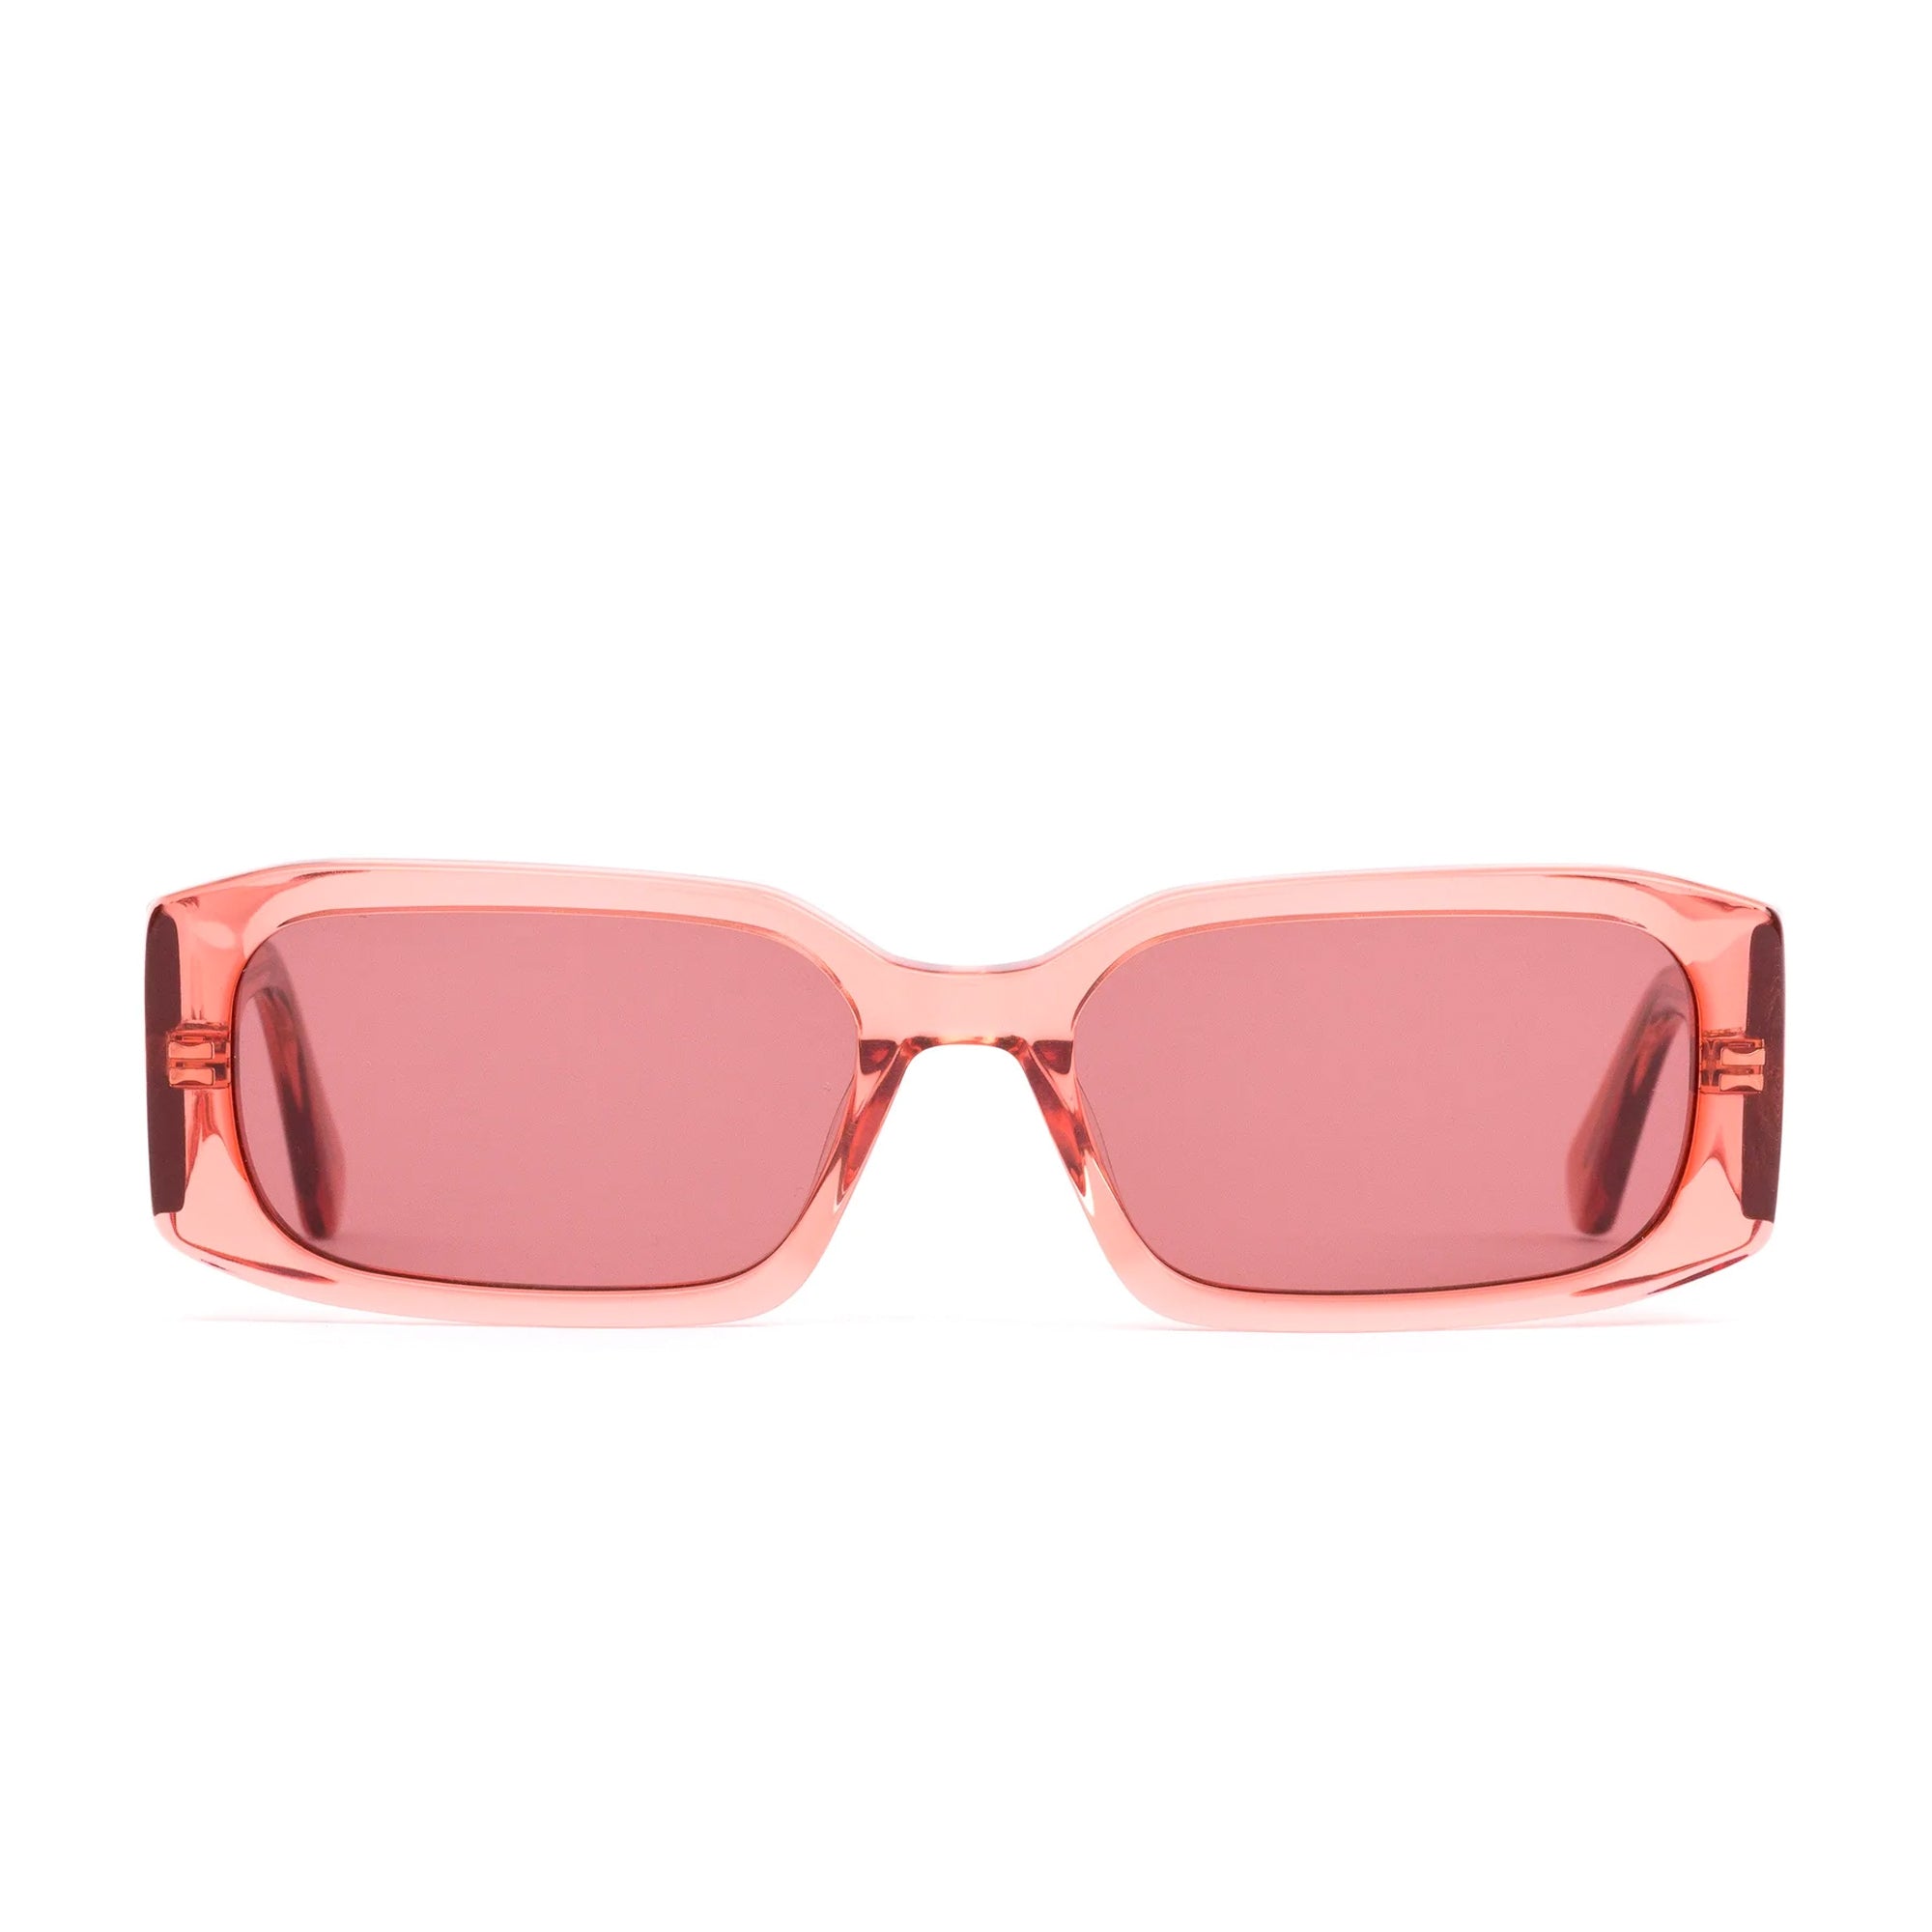 Sito Inner Vison Women's Sunglasses